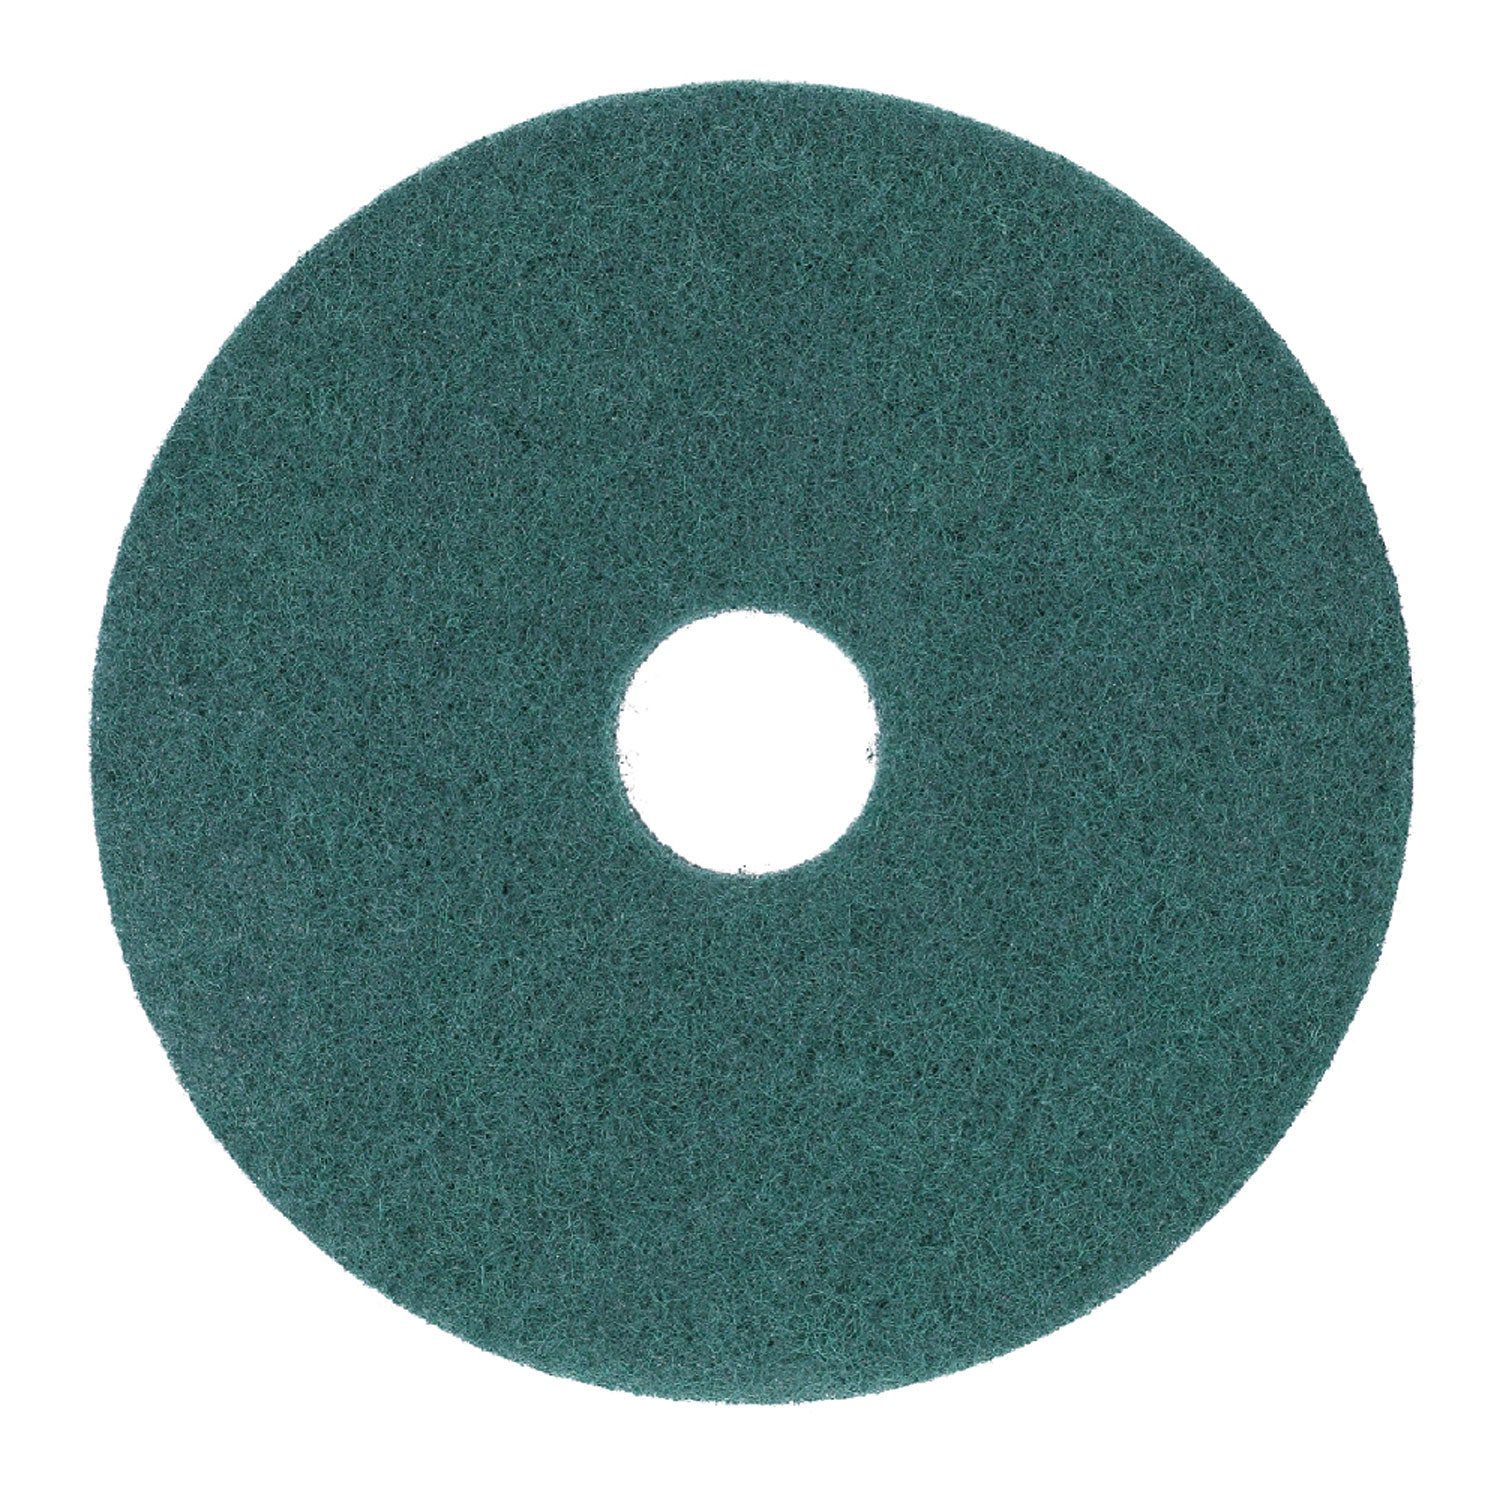 Heavy-Duty Scrubbing Floor Pads, 13" Diameter, Green, 5/Carton - 1